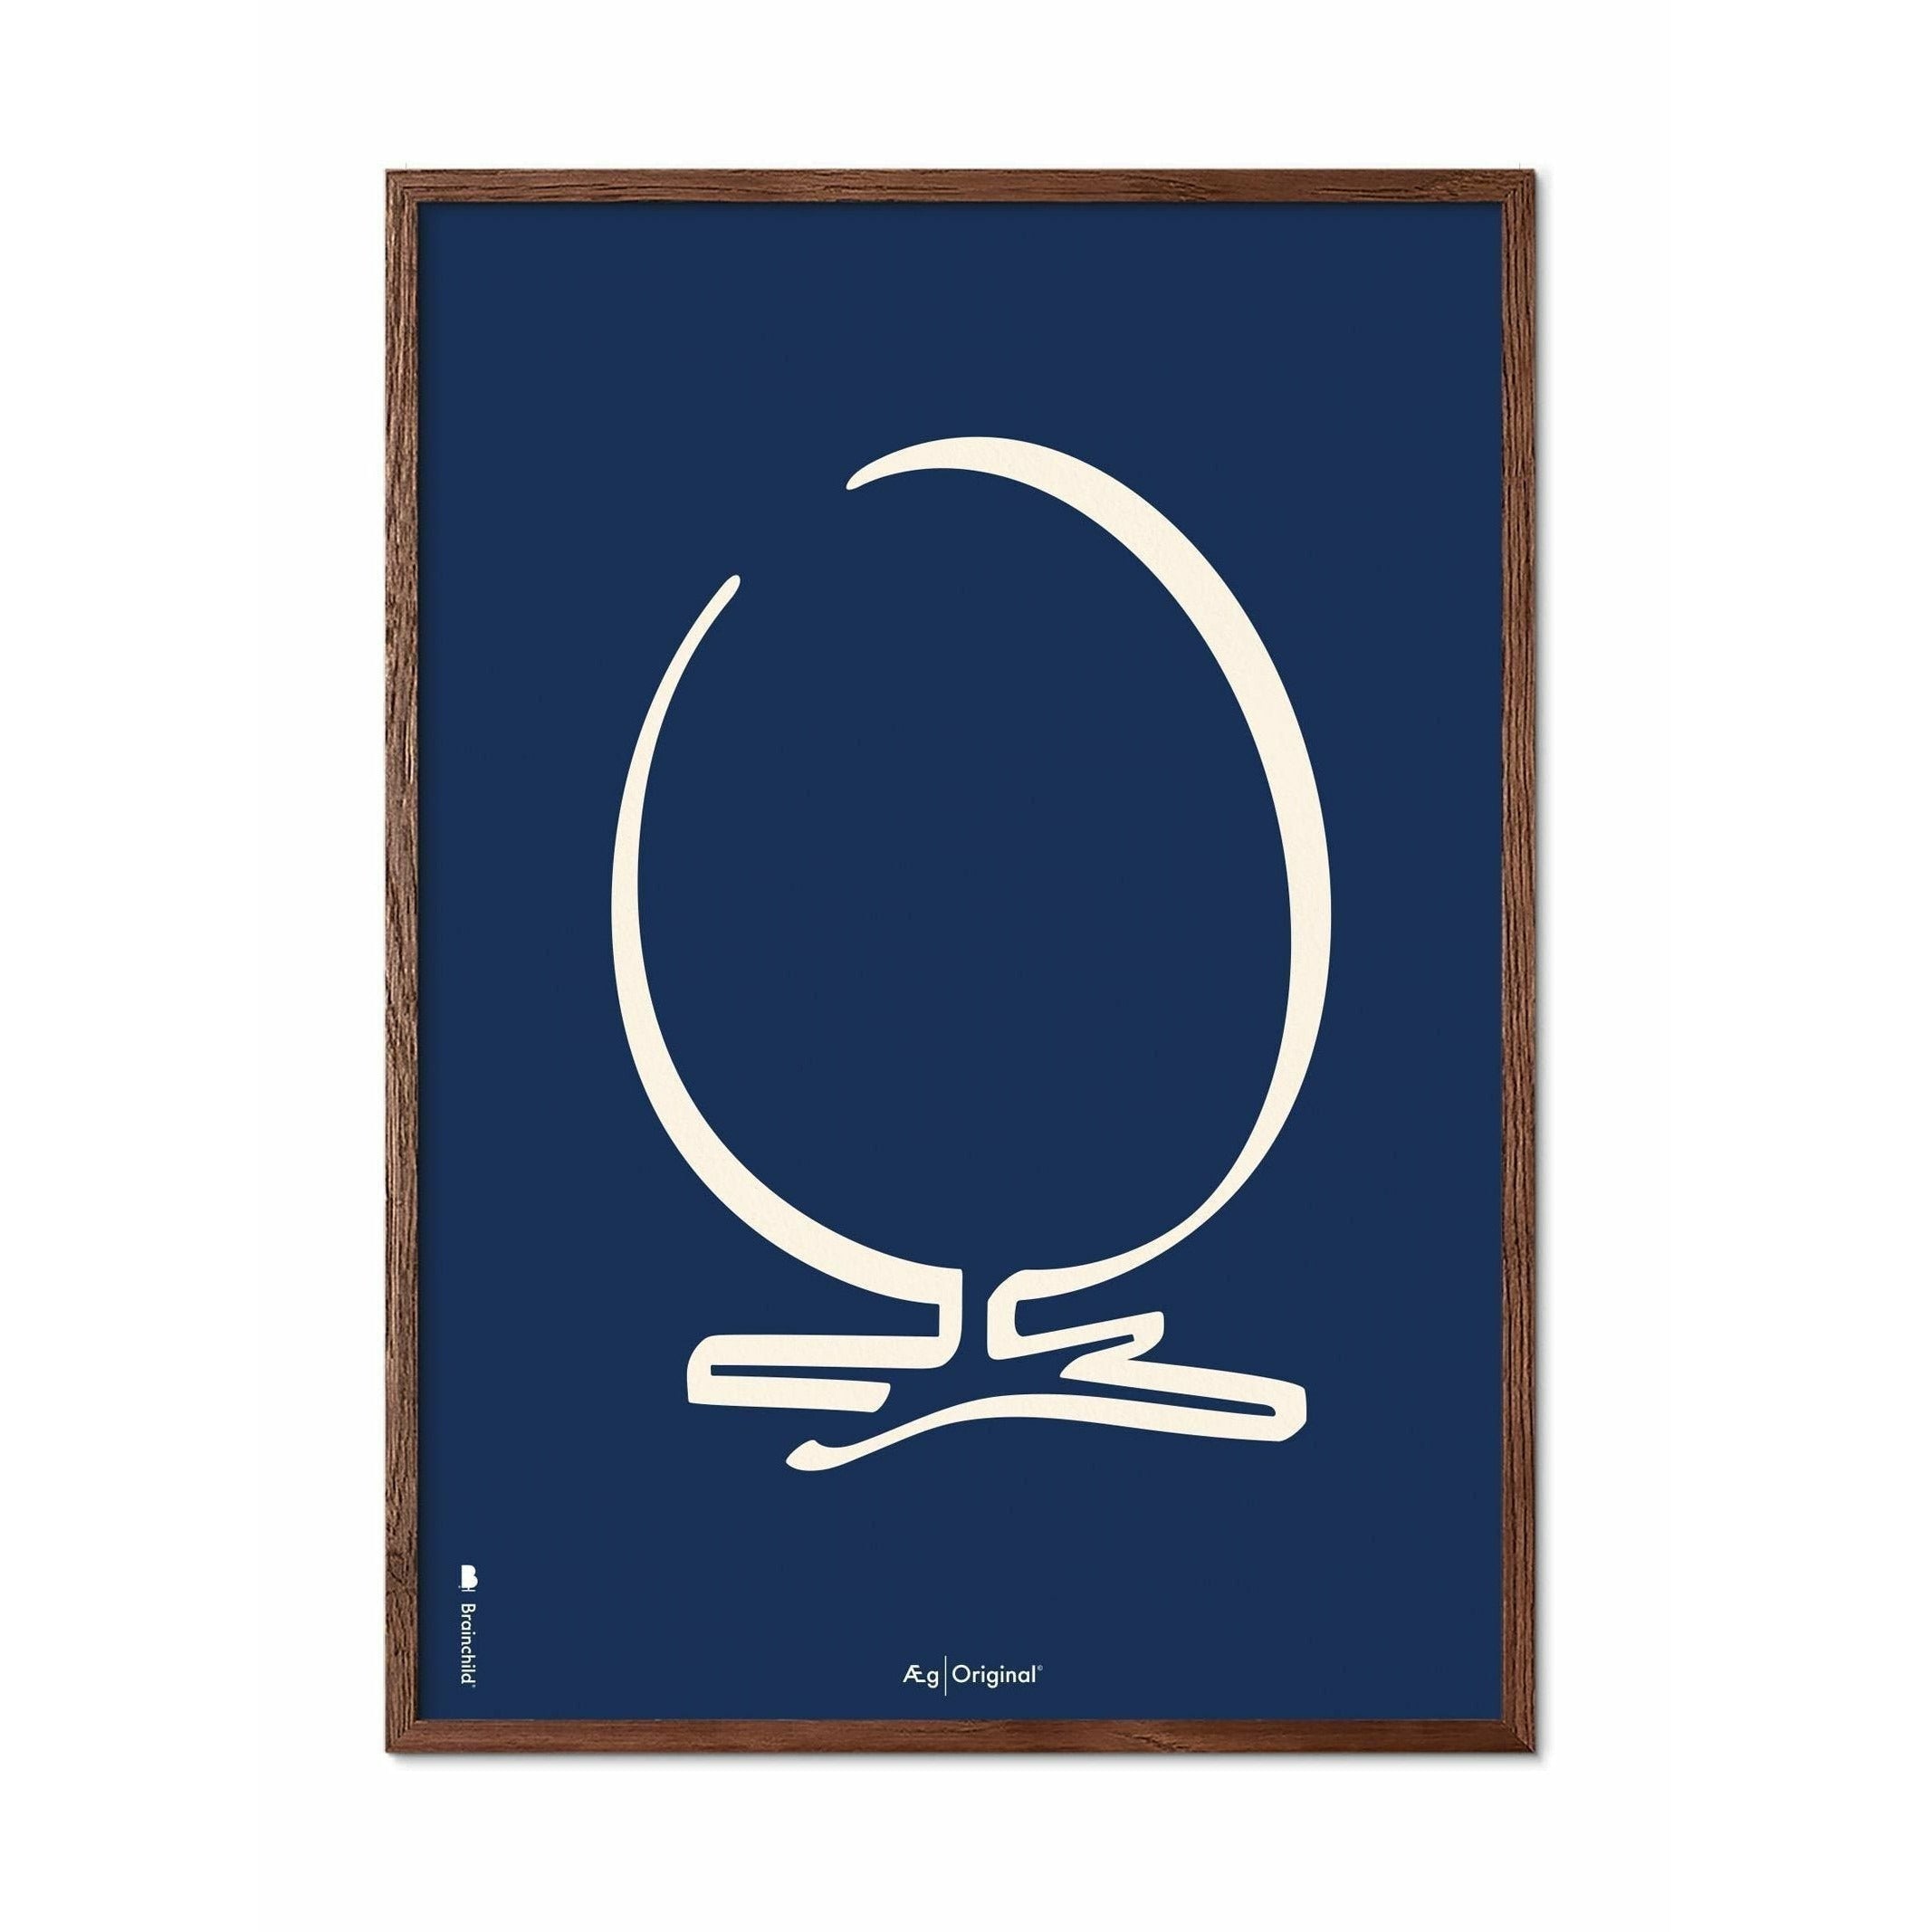 Brainchild Egg Line Poster, Frame Made Of Dark Wood 30x40 Cm, Blue Background